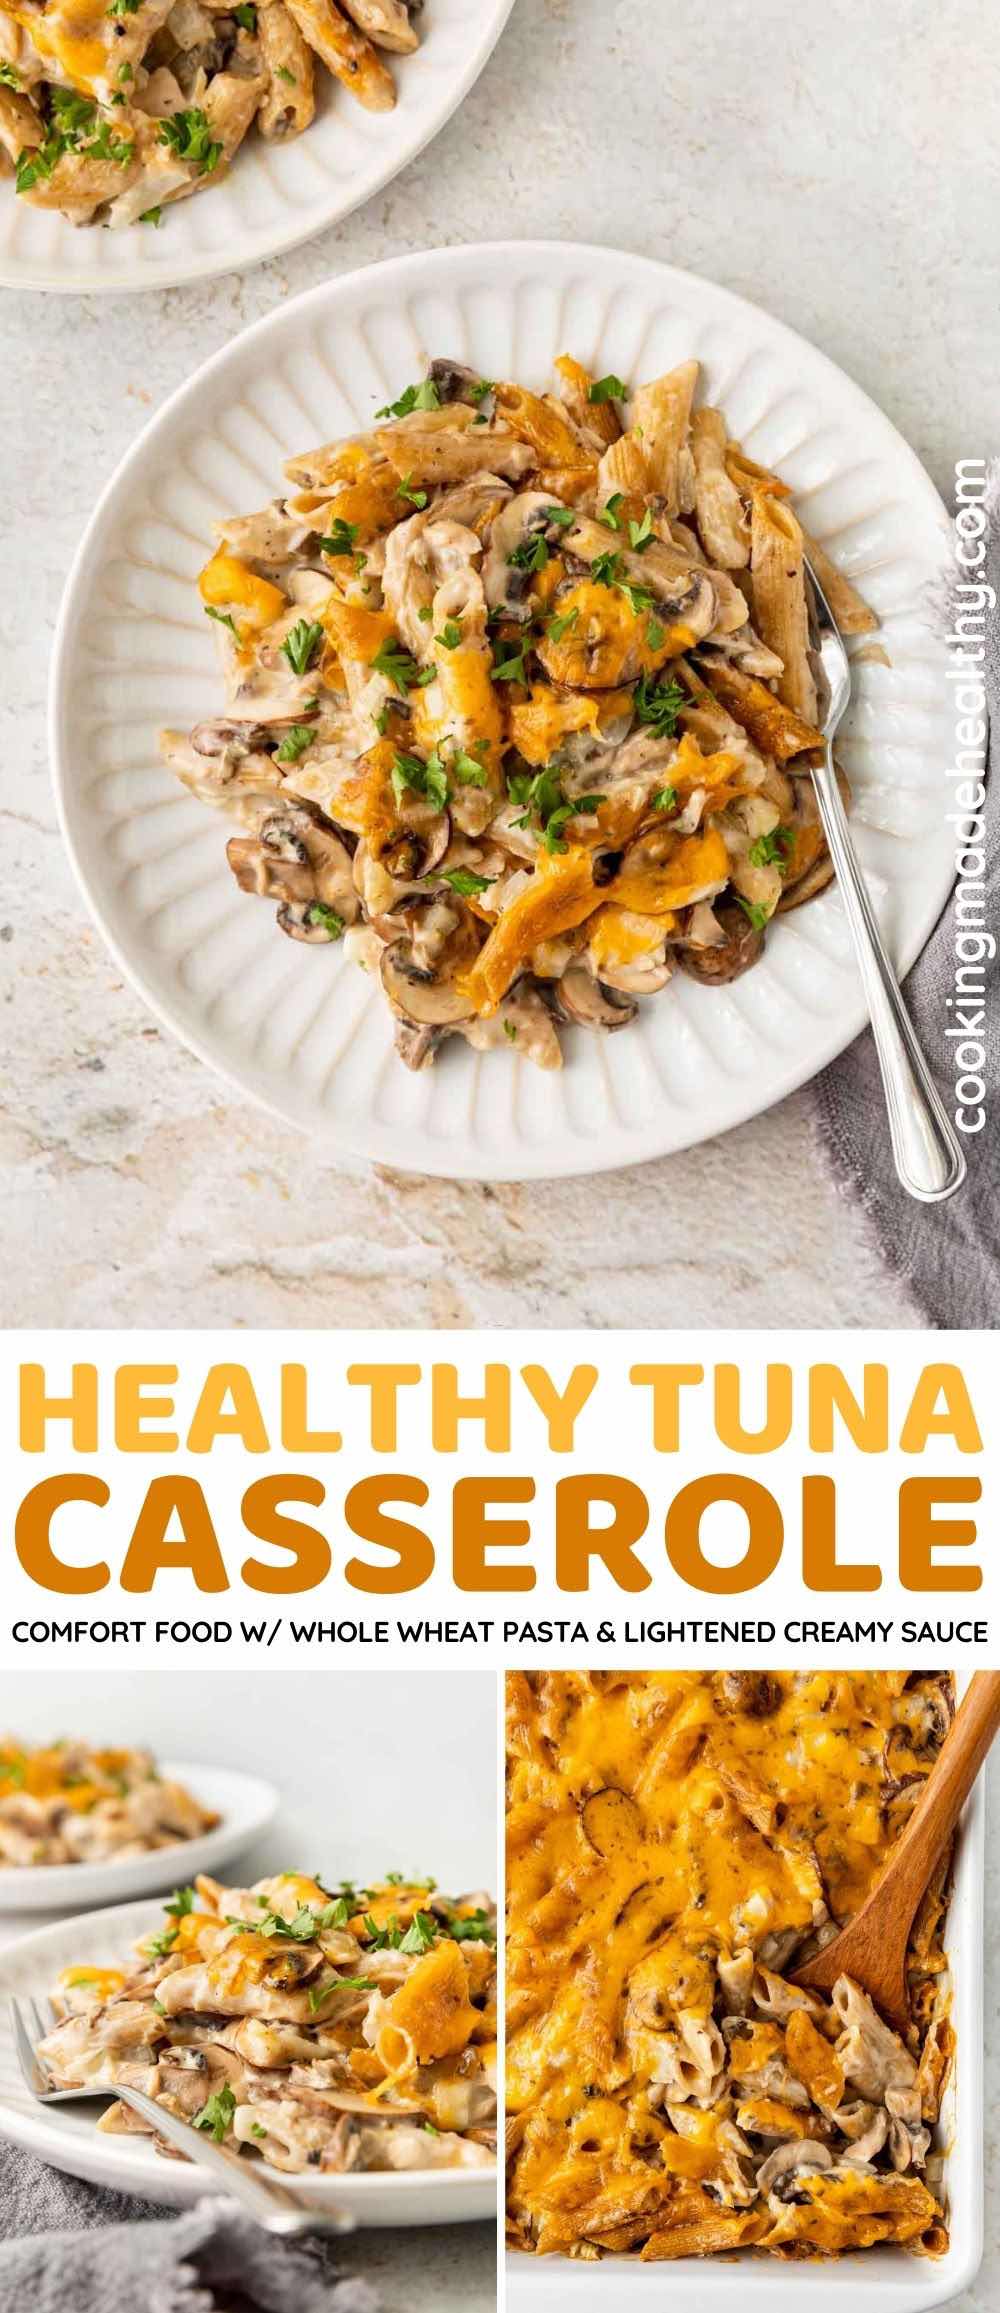 Healthy Tuna Casserole Collage